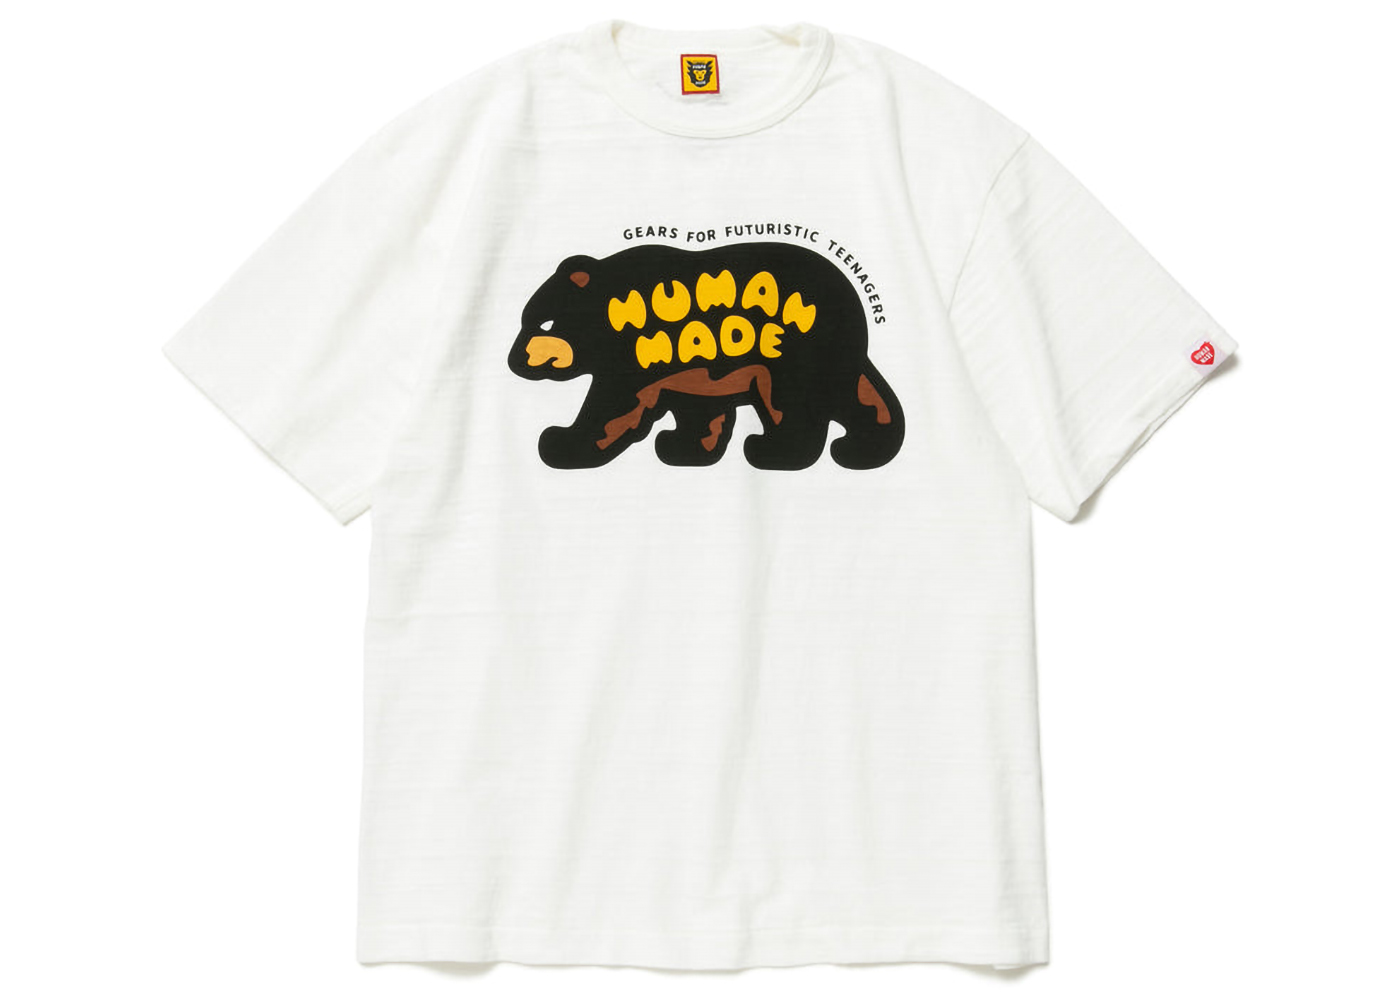 Human Made Bear Graphic #10 T-Shirt White Men's - SS23 - US